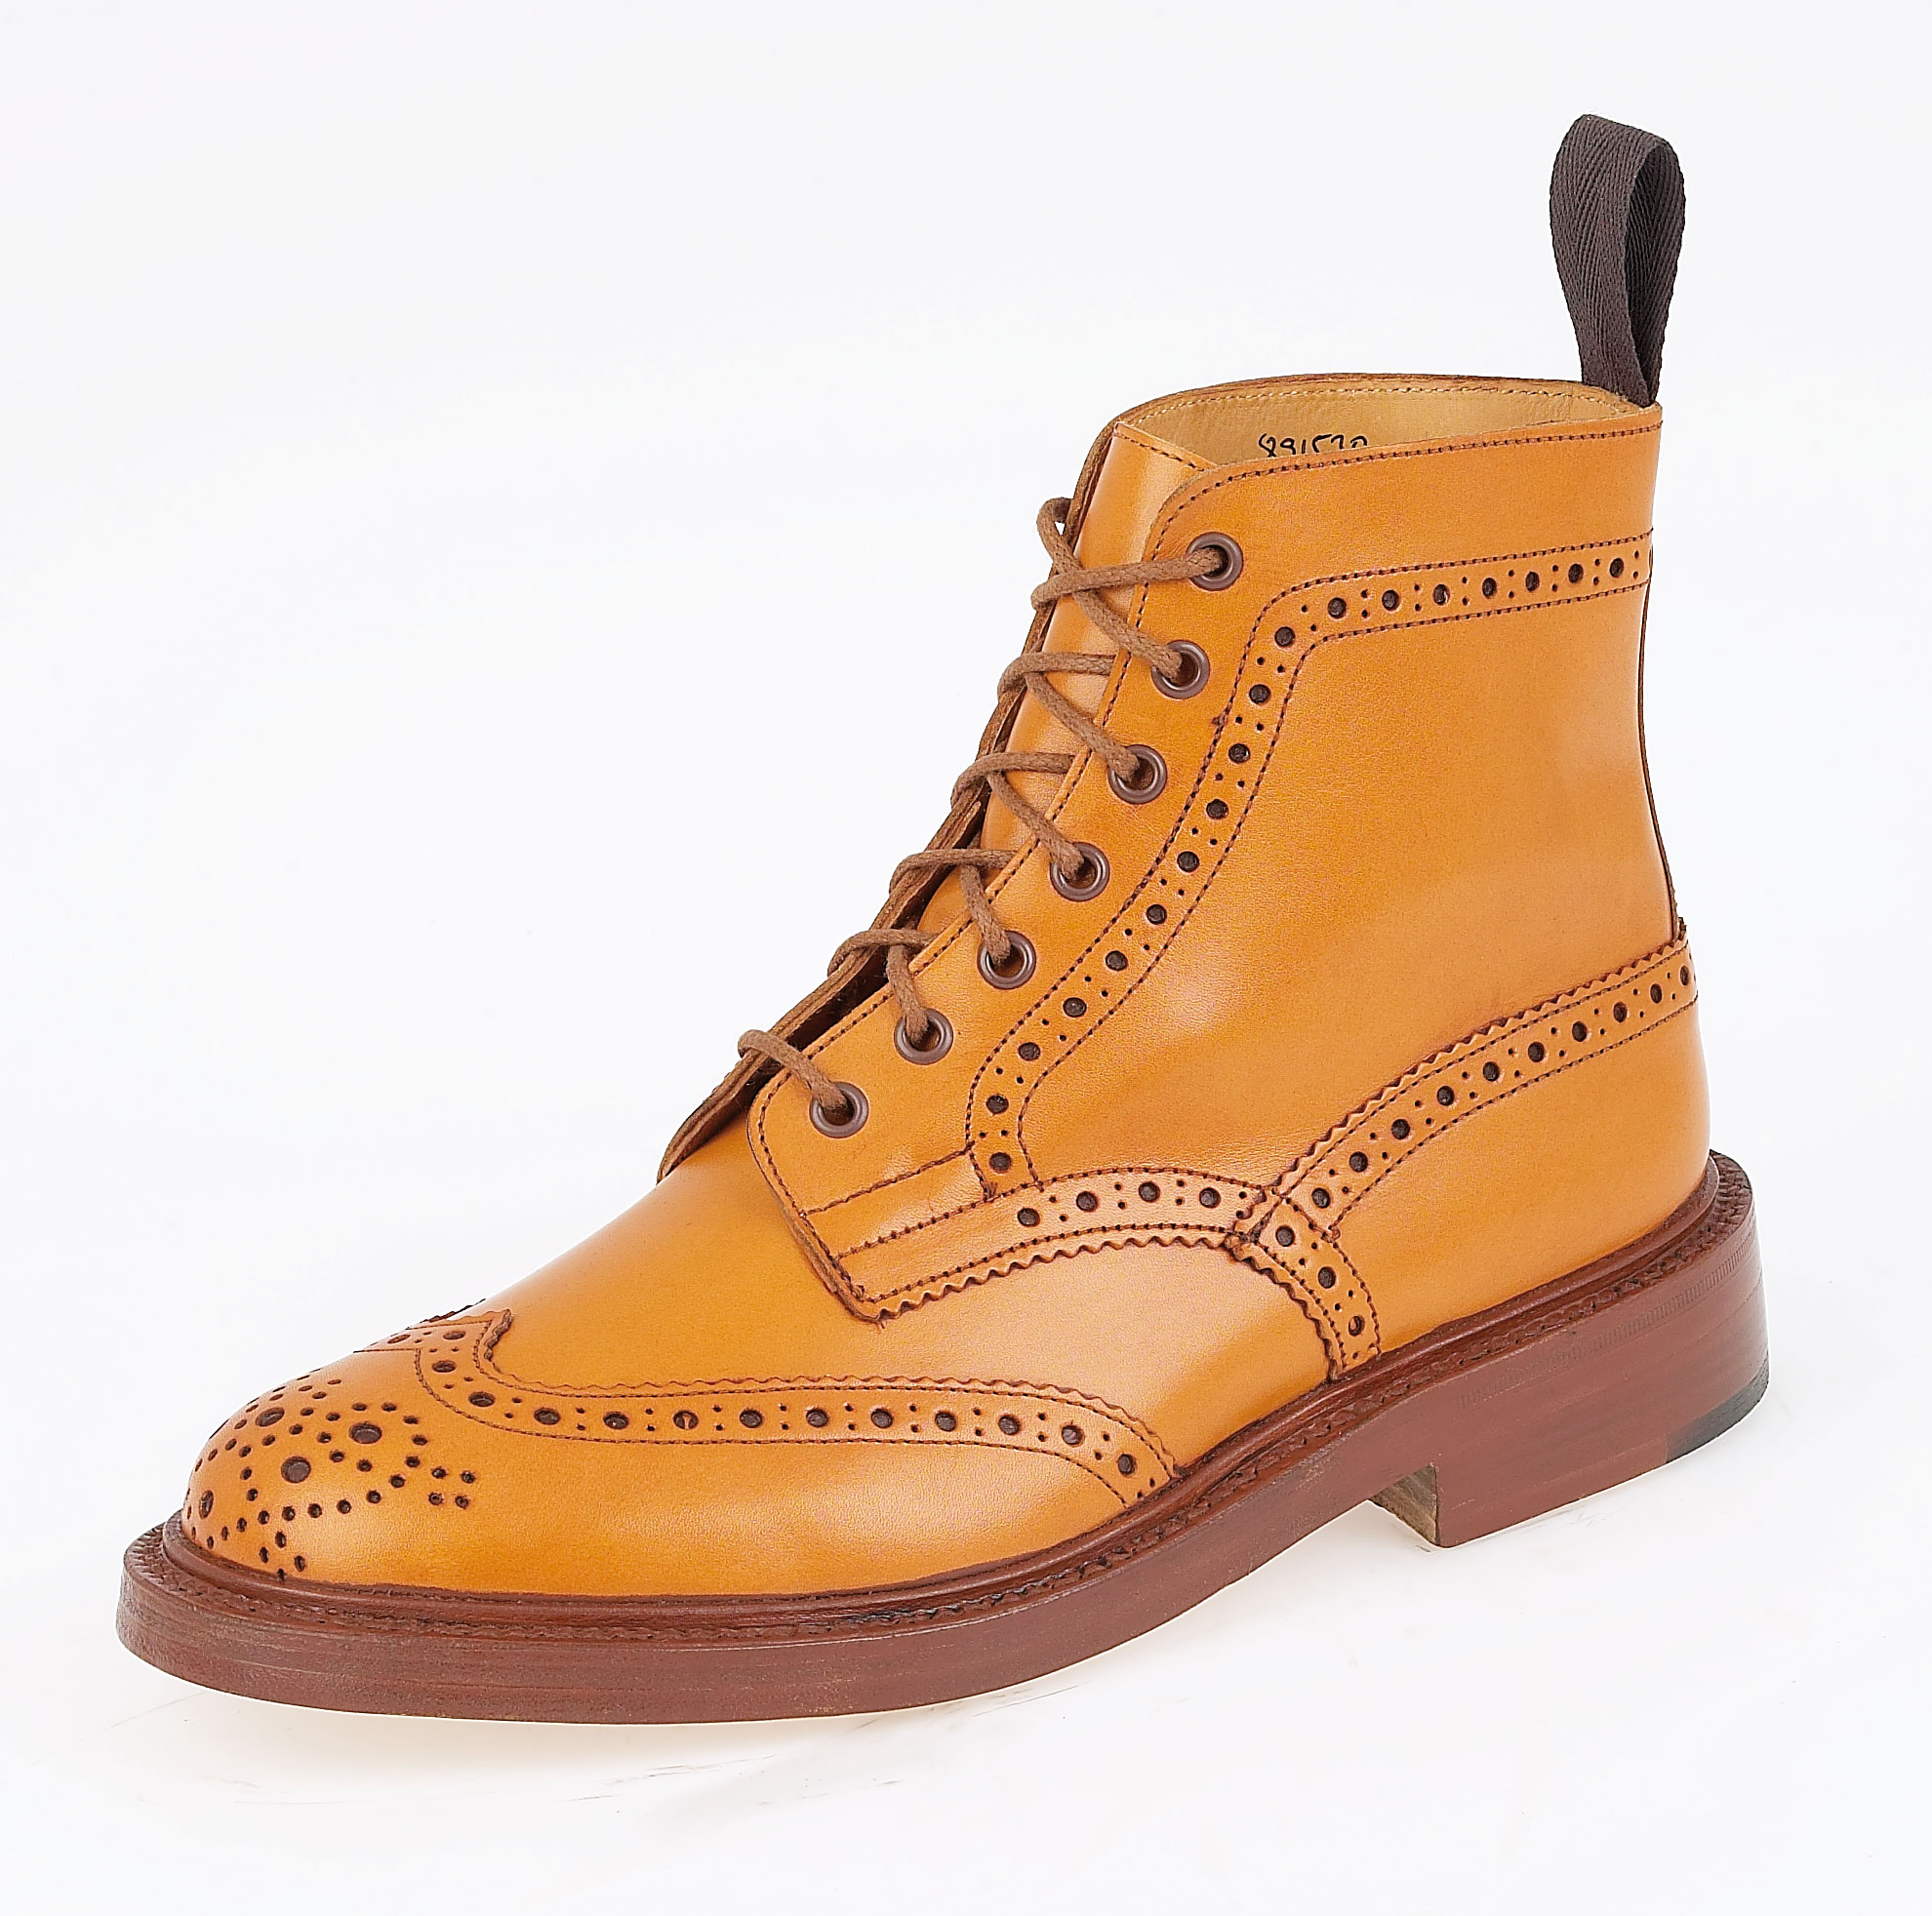 Trickers Stow Acorn - The Ilkley Shoe Company